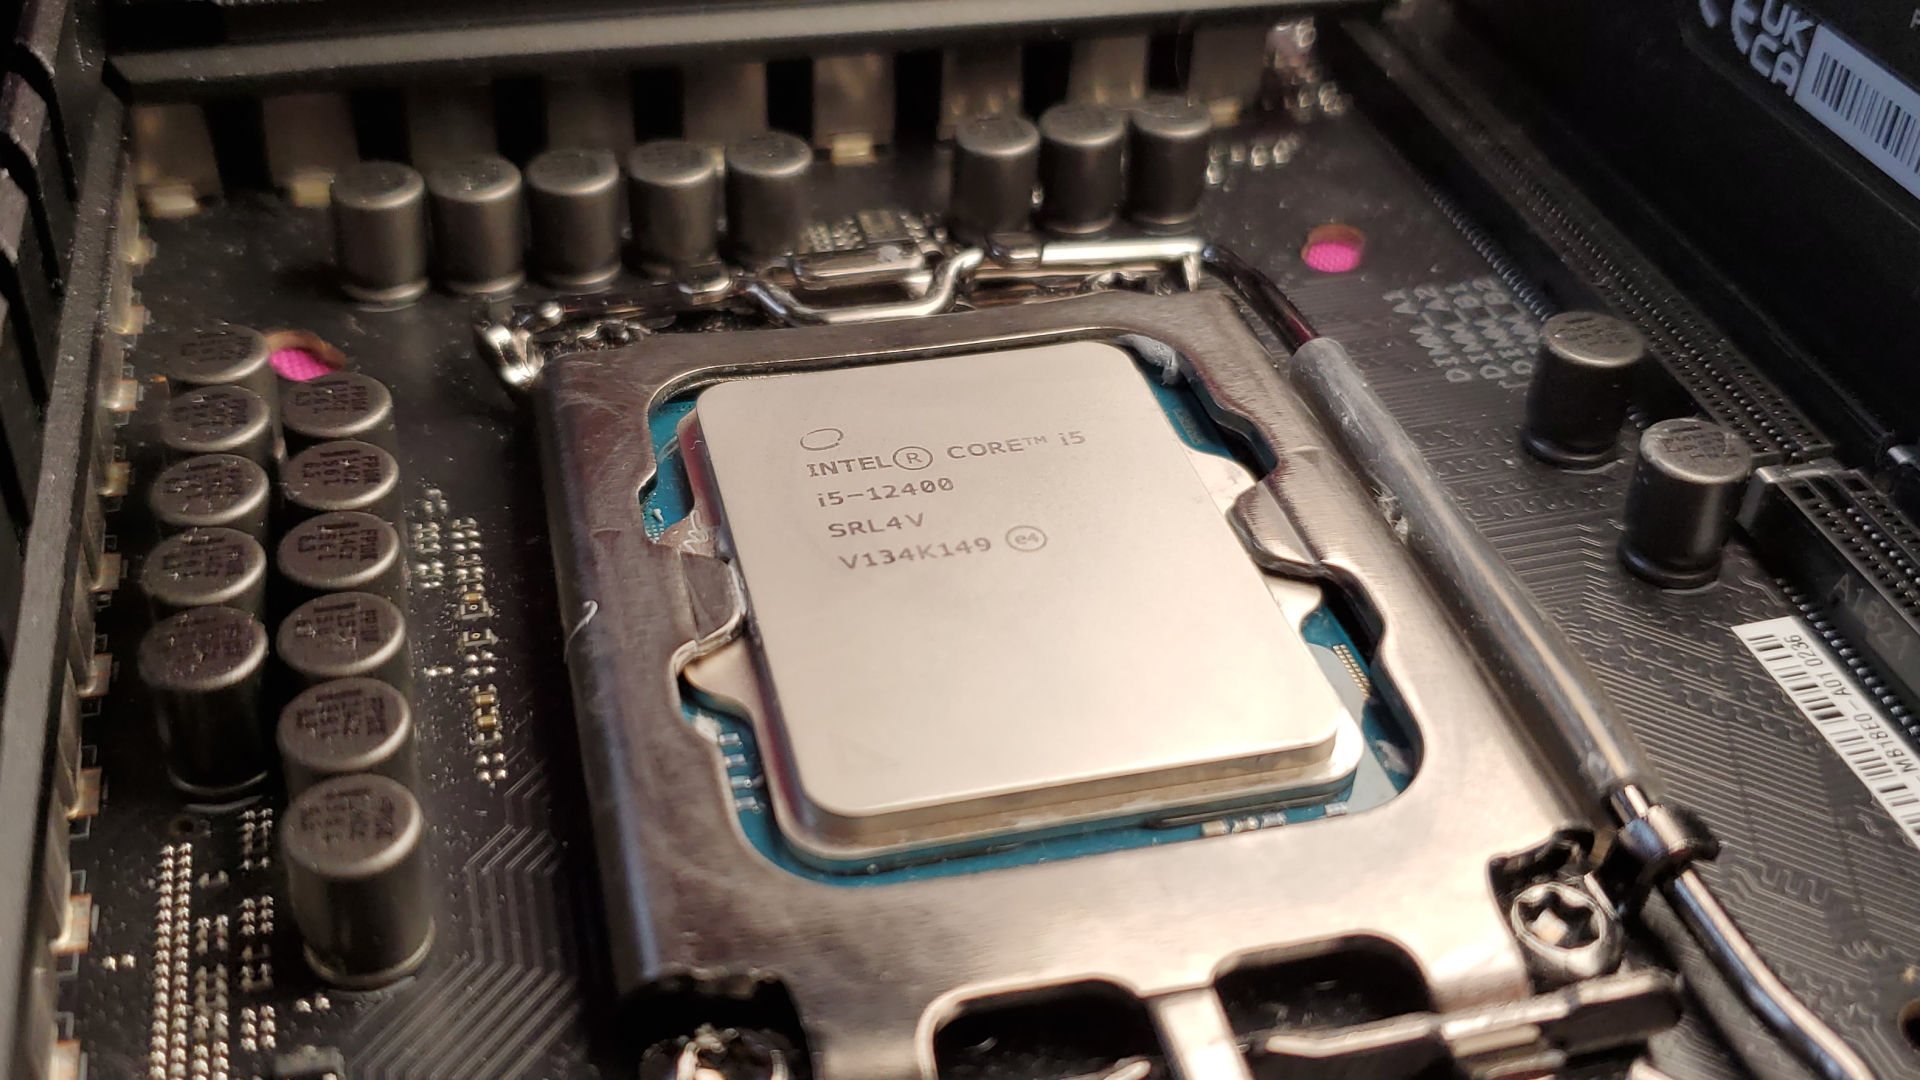 Intel Core i9 LGA 1700. I5 12400. Elkhart Lake CPU.